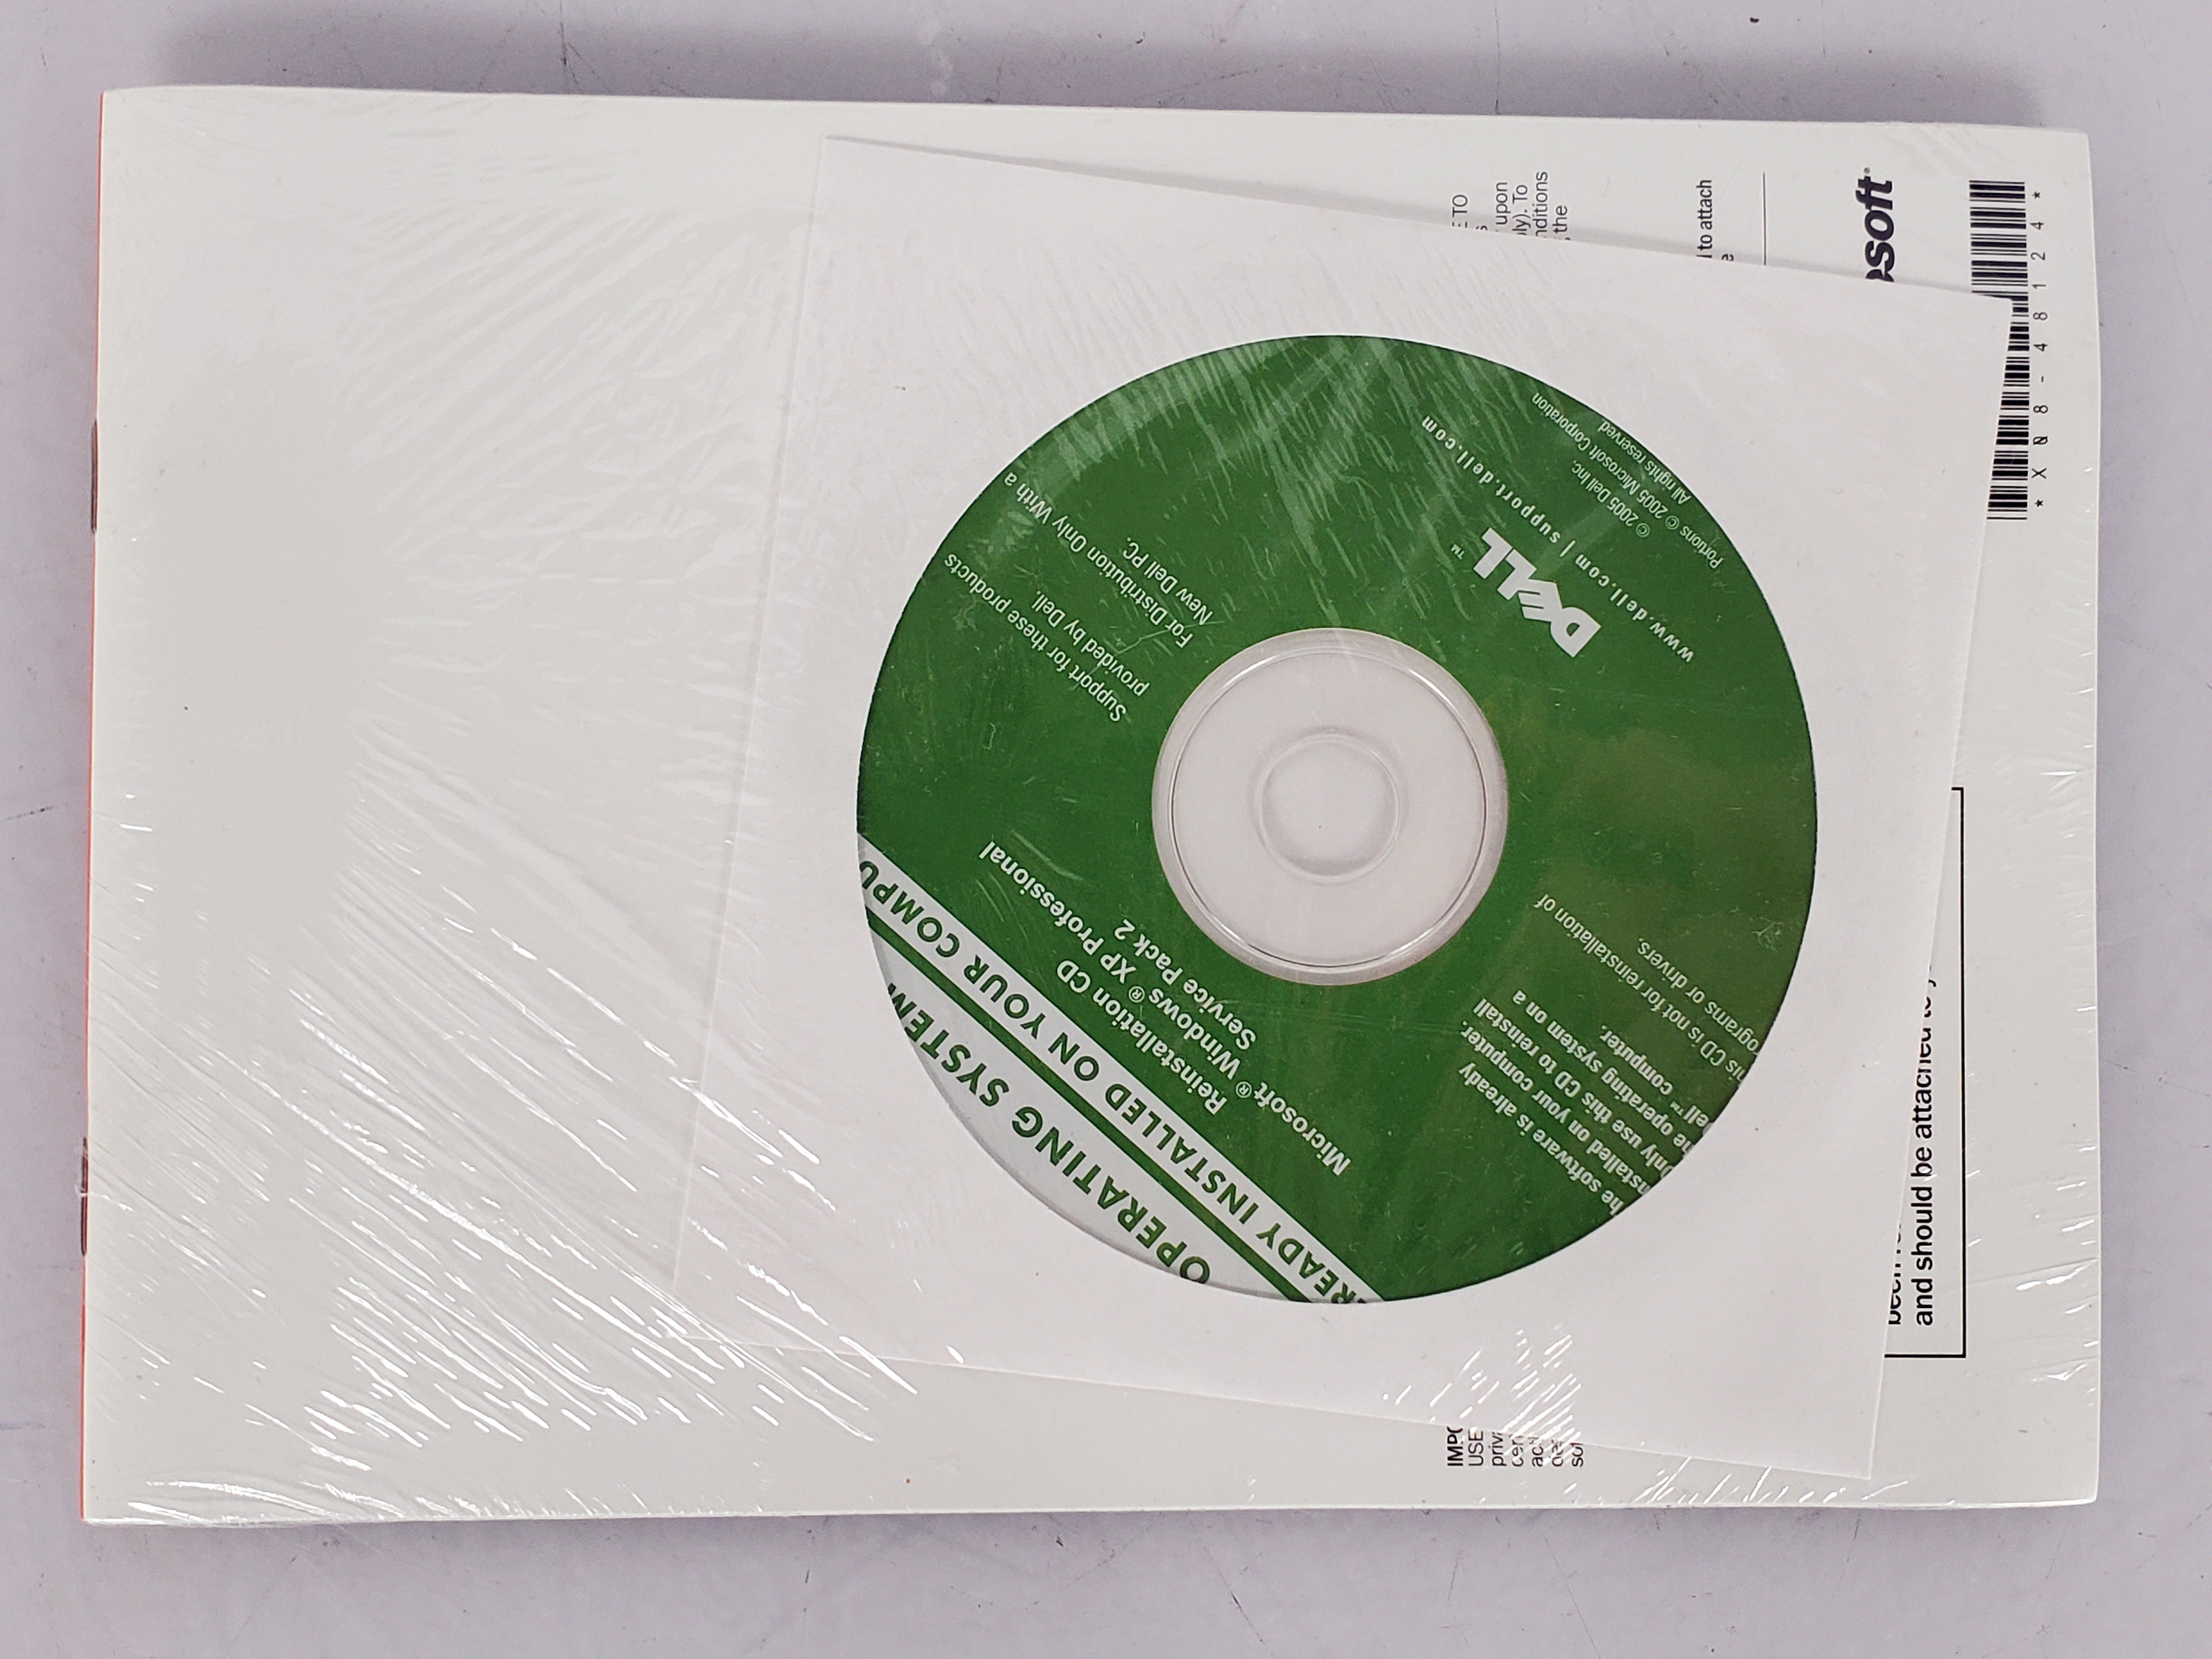 Windows XP Professional SP2 Re-Installation CD